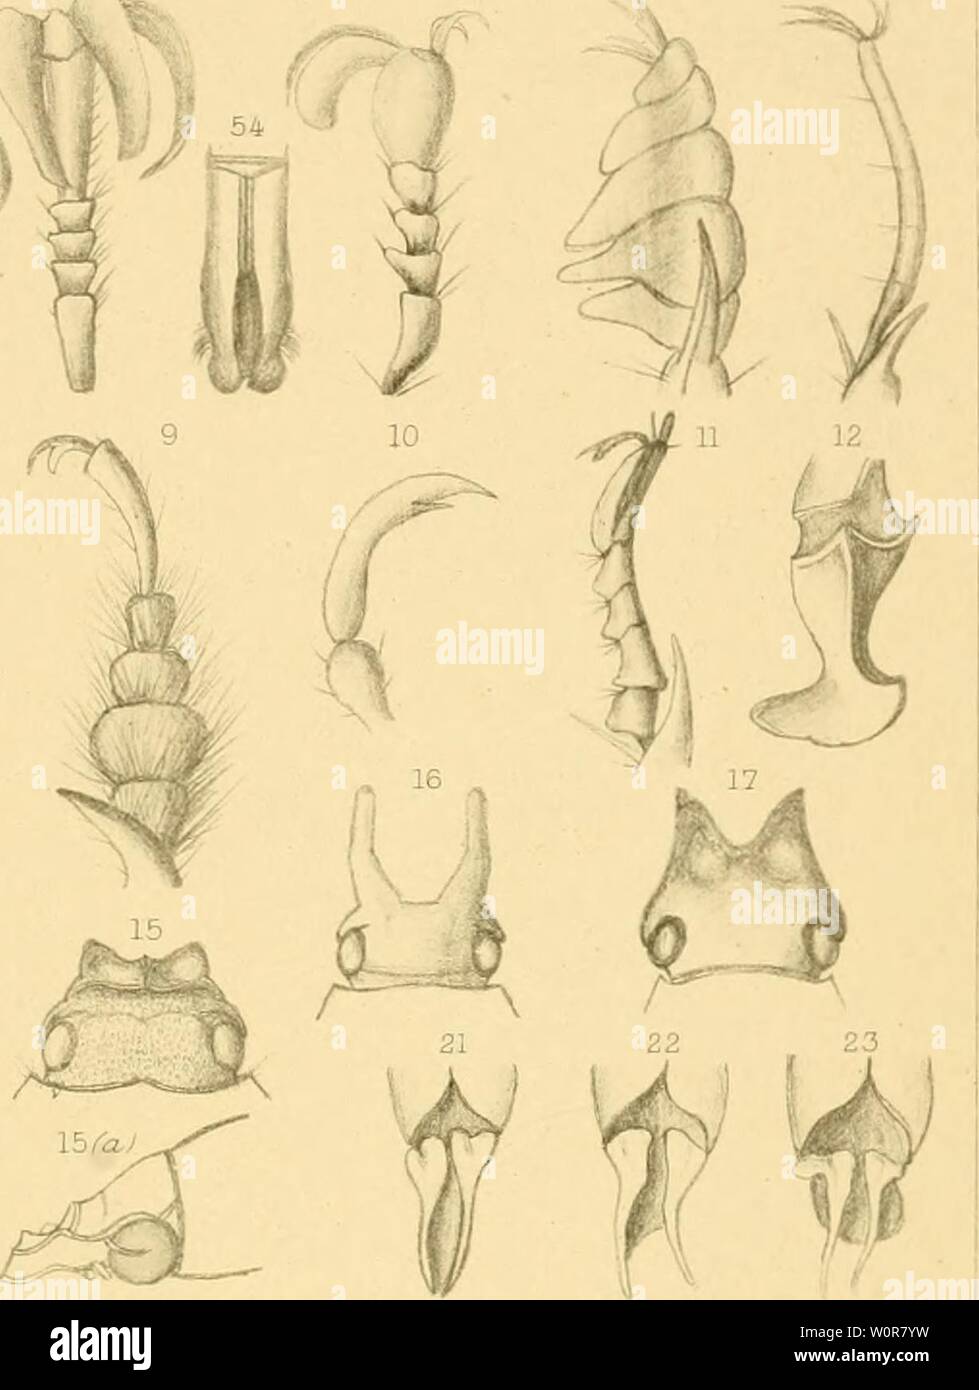 Archive image from page 306 of Descriptive catalogue of the coleoptera. Descriptive catalogue of the coleoptera of South Africa (Lucanidæ and Scarabæidæ) descriptivecatal131pr Year: 1902  Trans, SAfr PHil.Soc.Vol.XIII PL, IV. DESCR.CAT.S.AFR.COLEOPTERA PL.XLVI, 4il 18 i n 19    24 25 26 27 28 29 30 31 32 33 ,34 .35 .rf.5--36 .38 -«39 40 « 42 46 47 48 Stock Photo